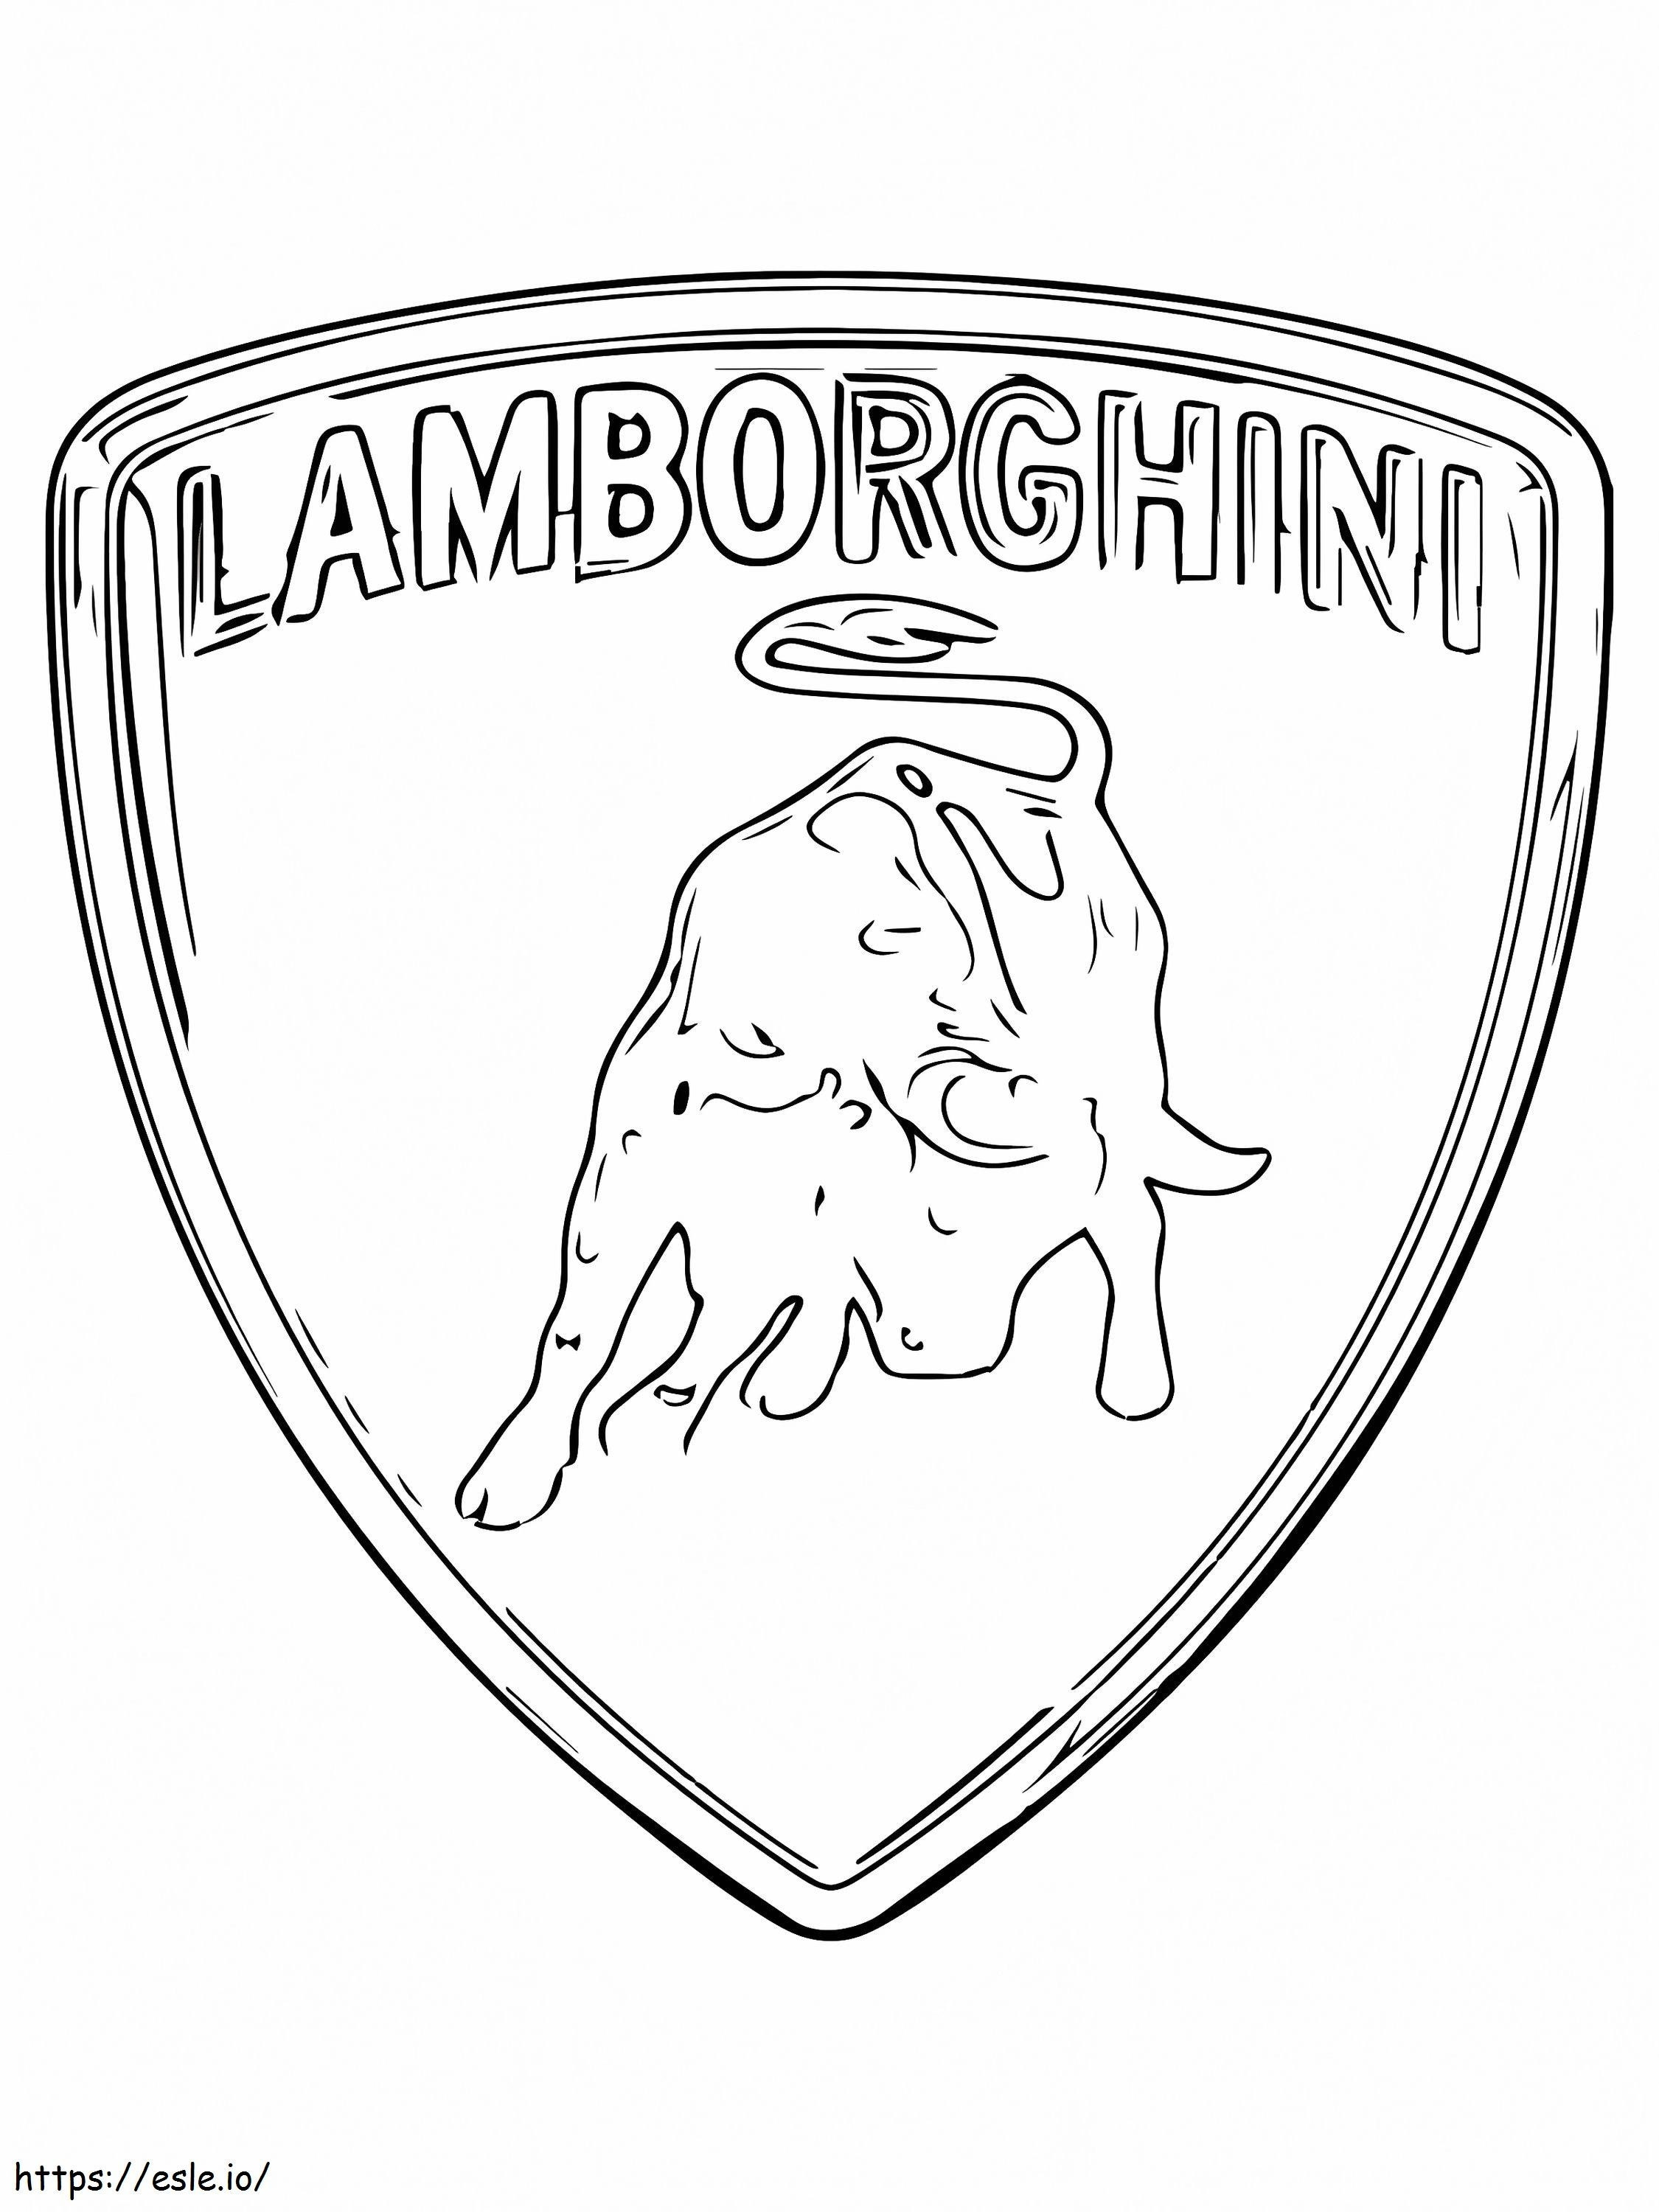 Logotipo do carro Lamborghini para colorir